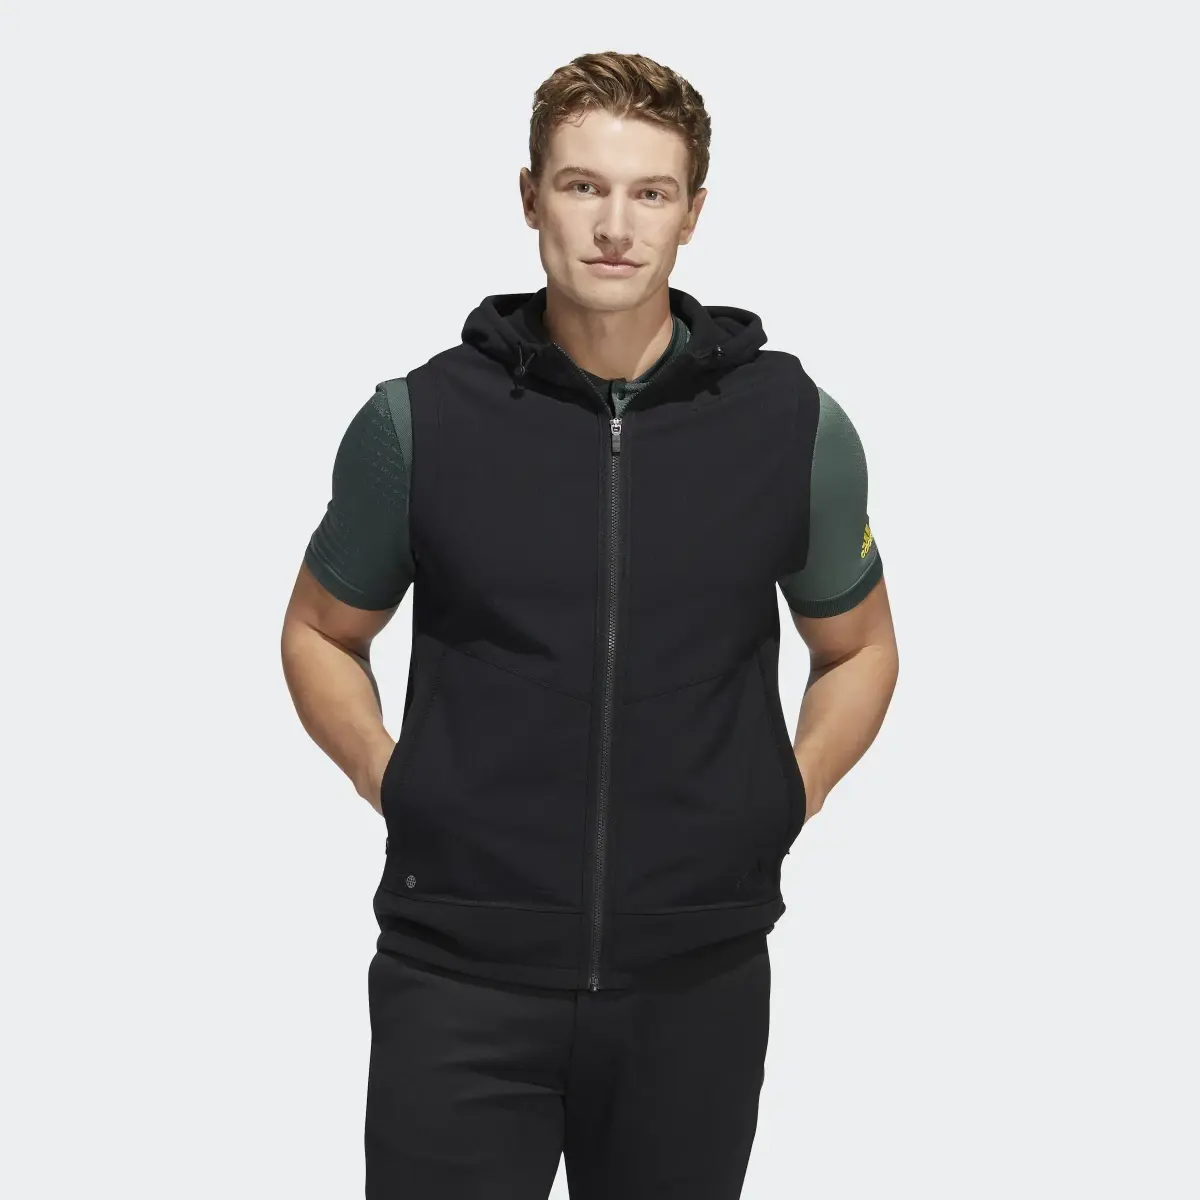 Adidas Statement Full-Zip Hooded Golf Vest. 2